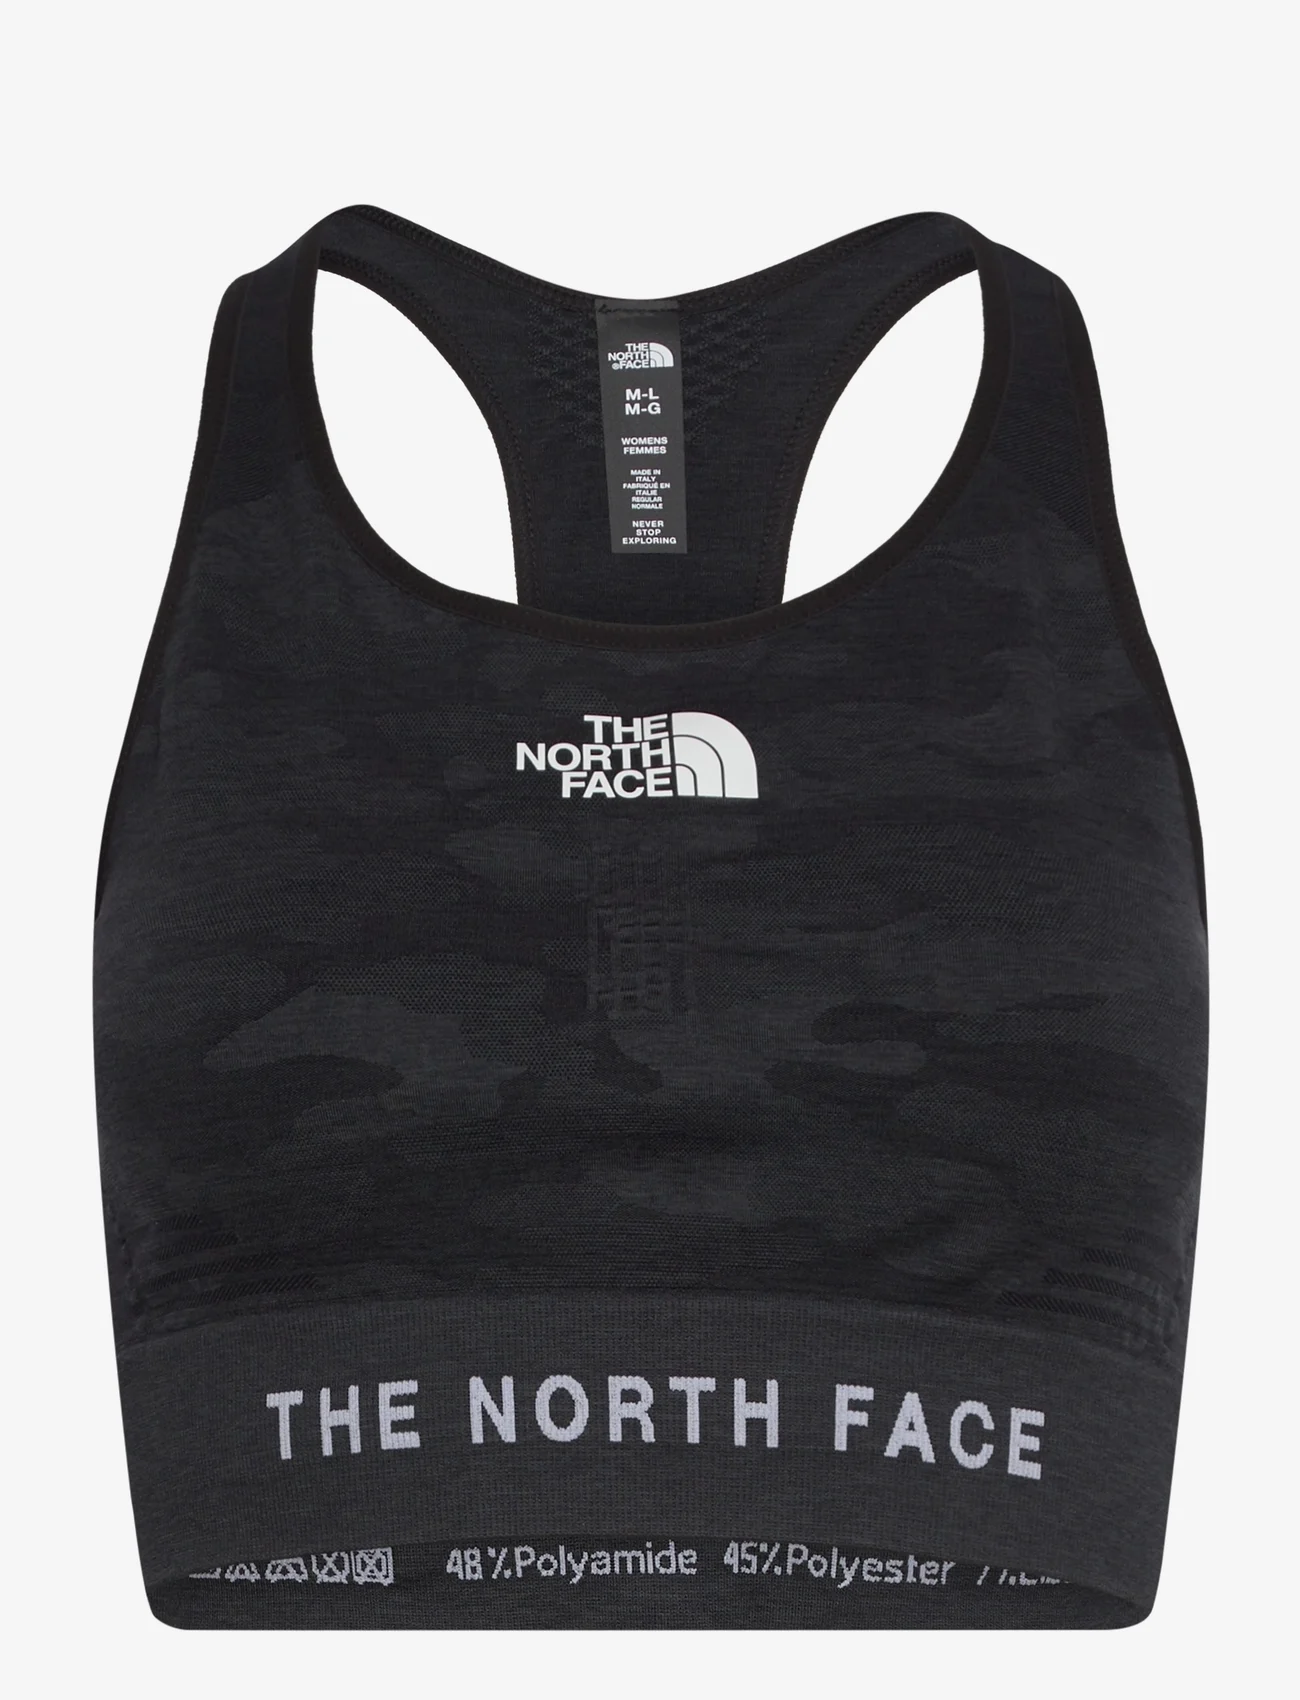 The North Face - WOMEN’S MA LAB SEAMLESS TOP - sport-bhs - tnf black/asphalt grey - 0